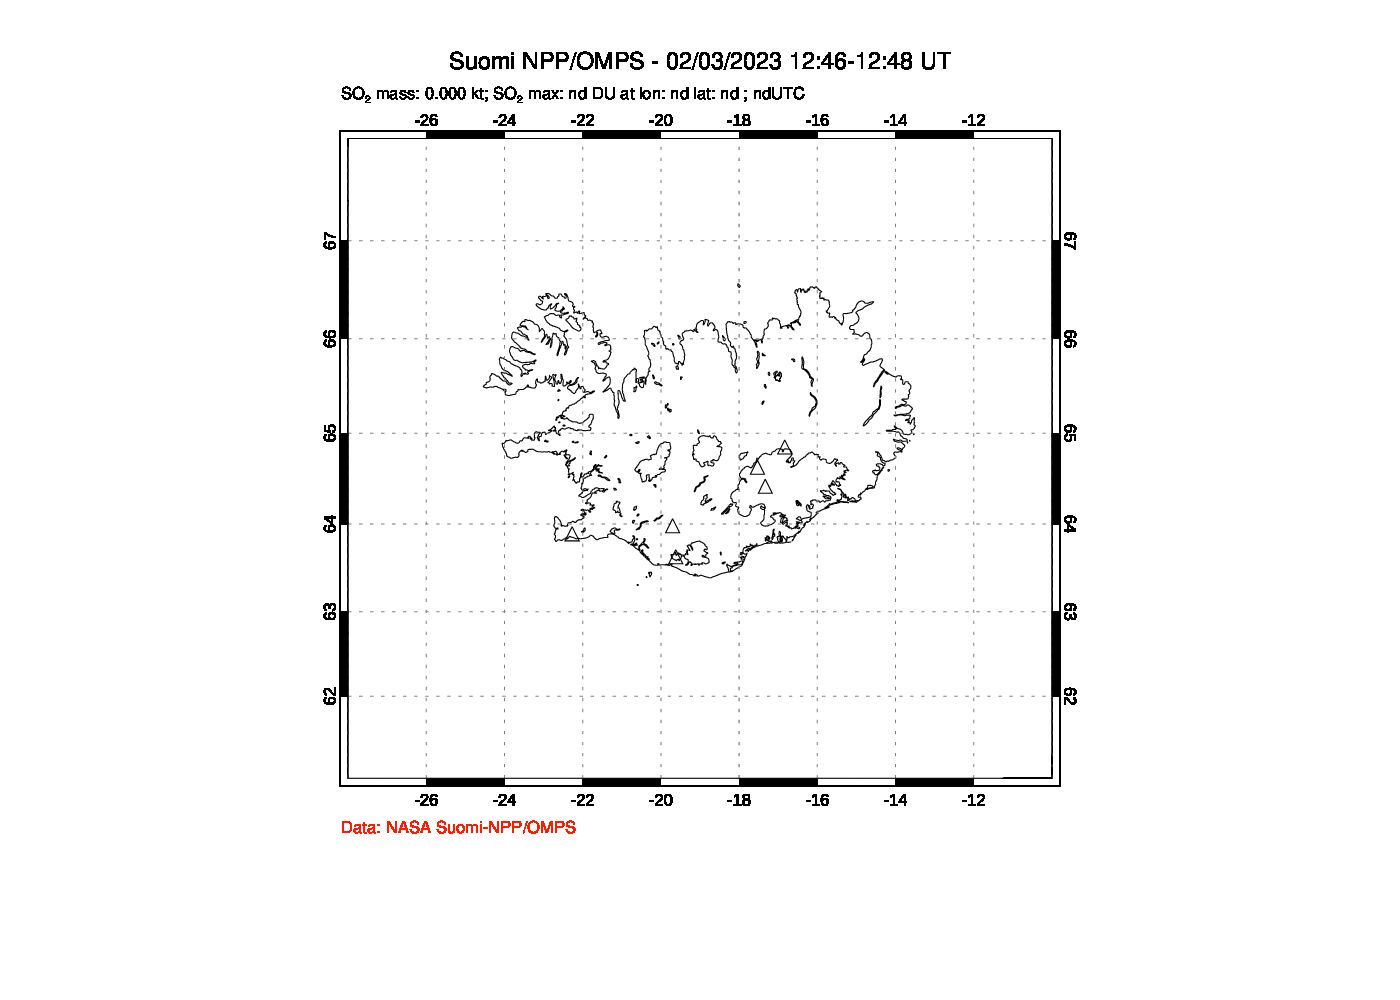 A sulfur dioxide image over Iceland on Feb 03, 2023.